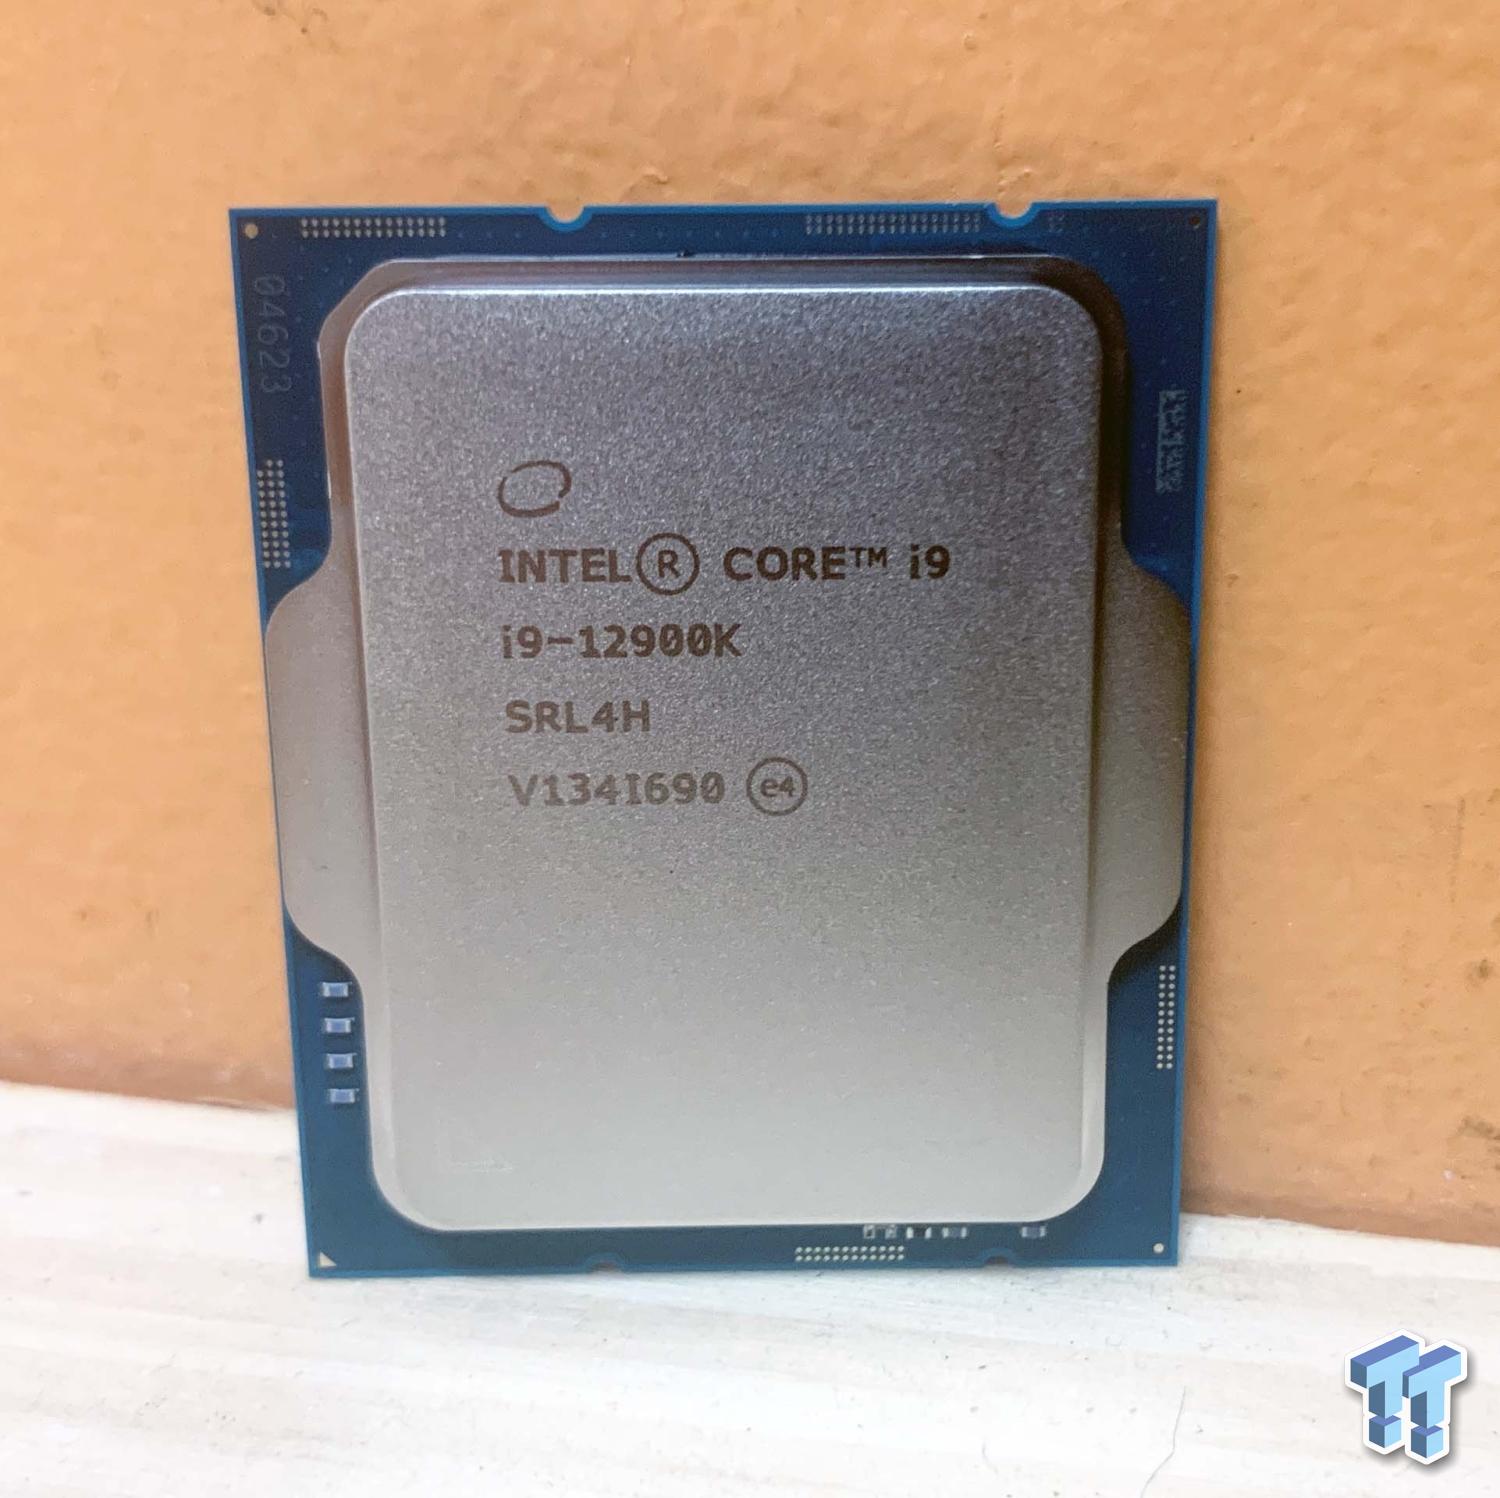 Intel Core i9-12900K Alder Lake CPU Review